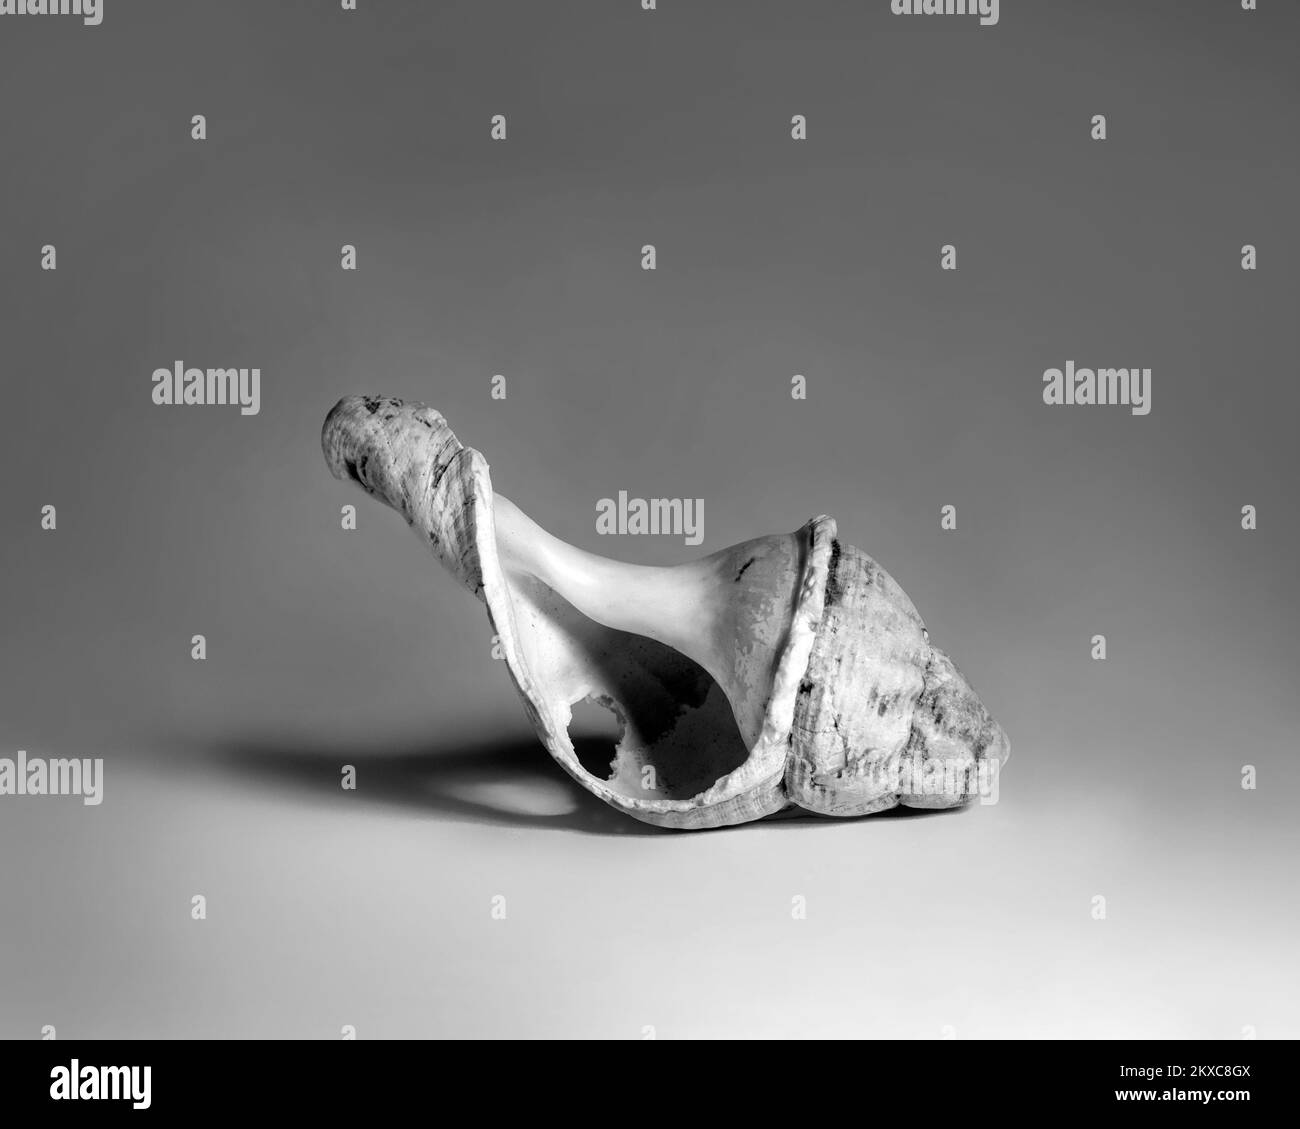 Single Broken seashell in black and white Stock Photo